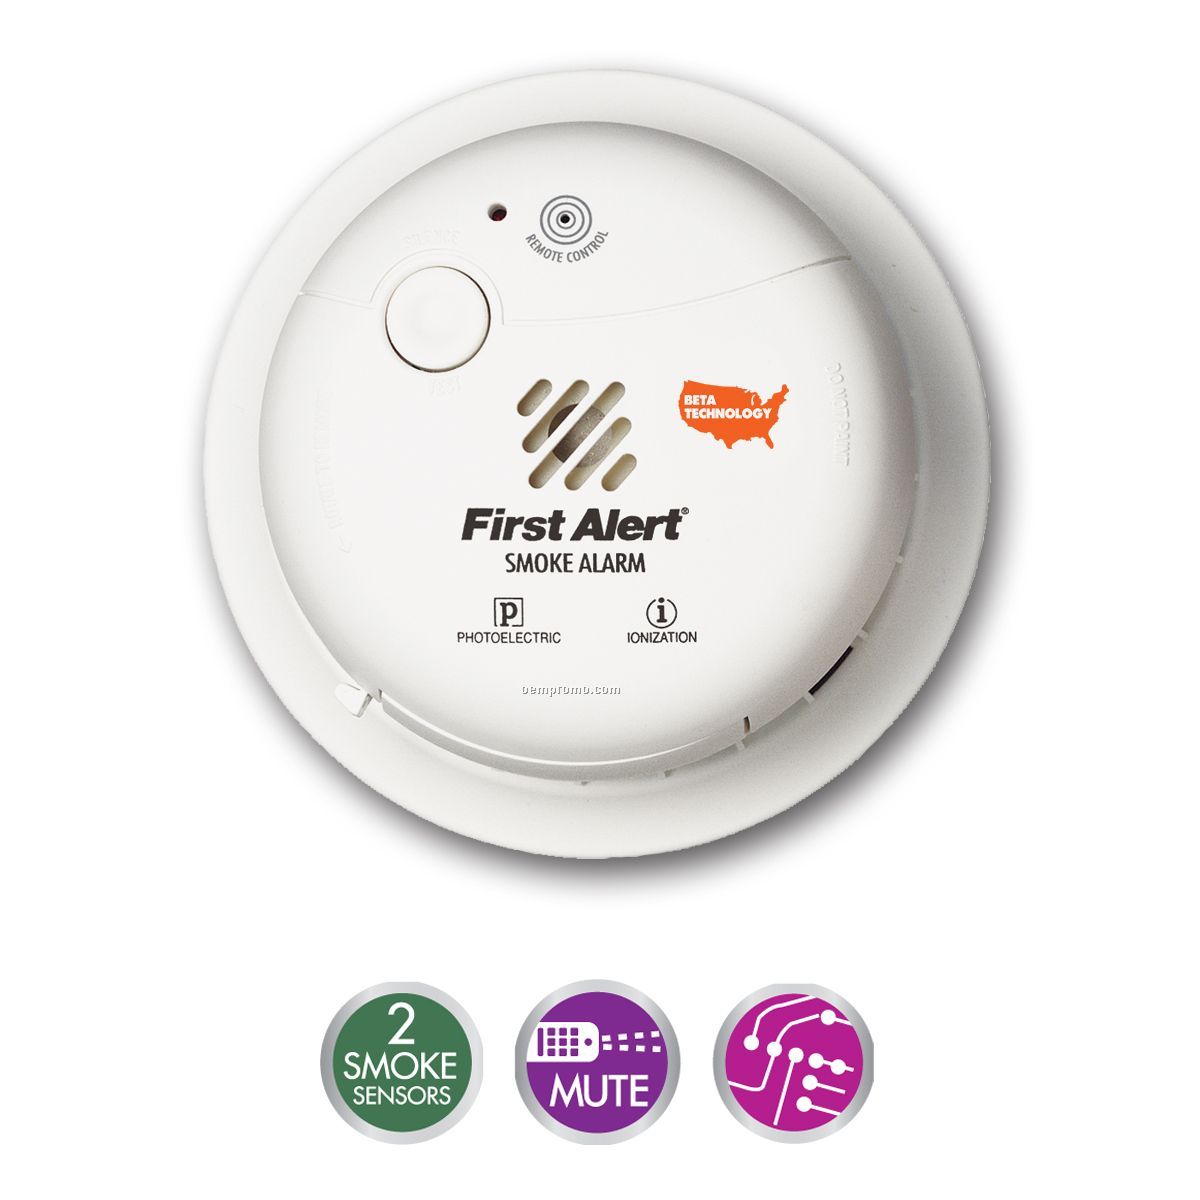 Dual Sensor "Smart" Smoke Alarm